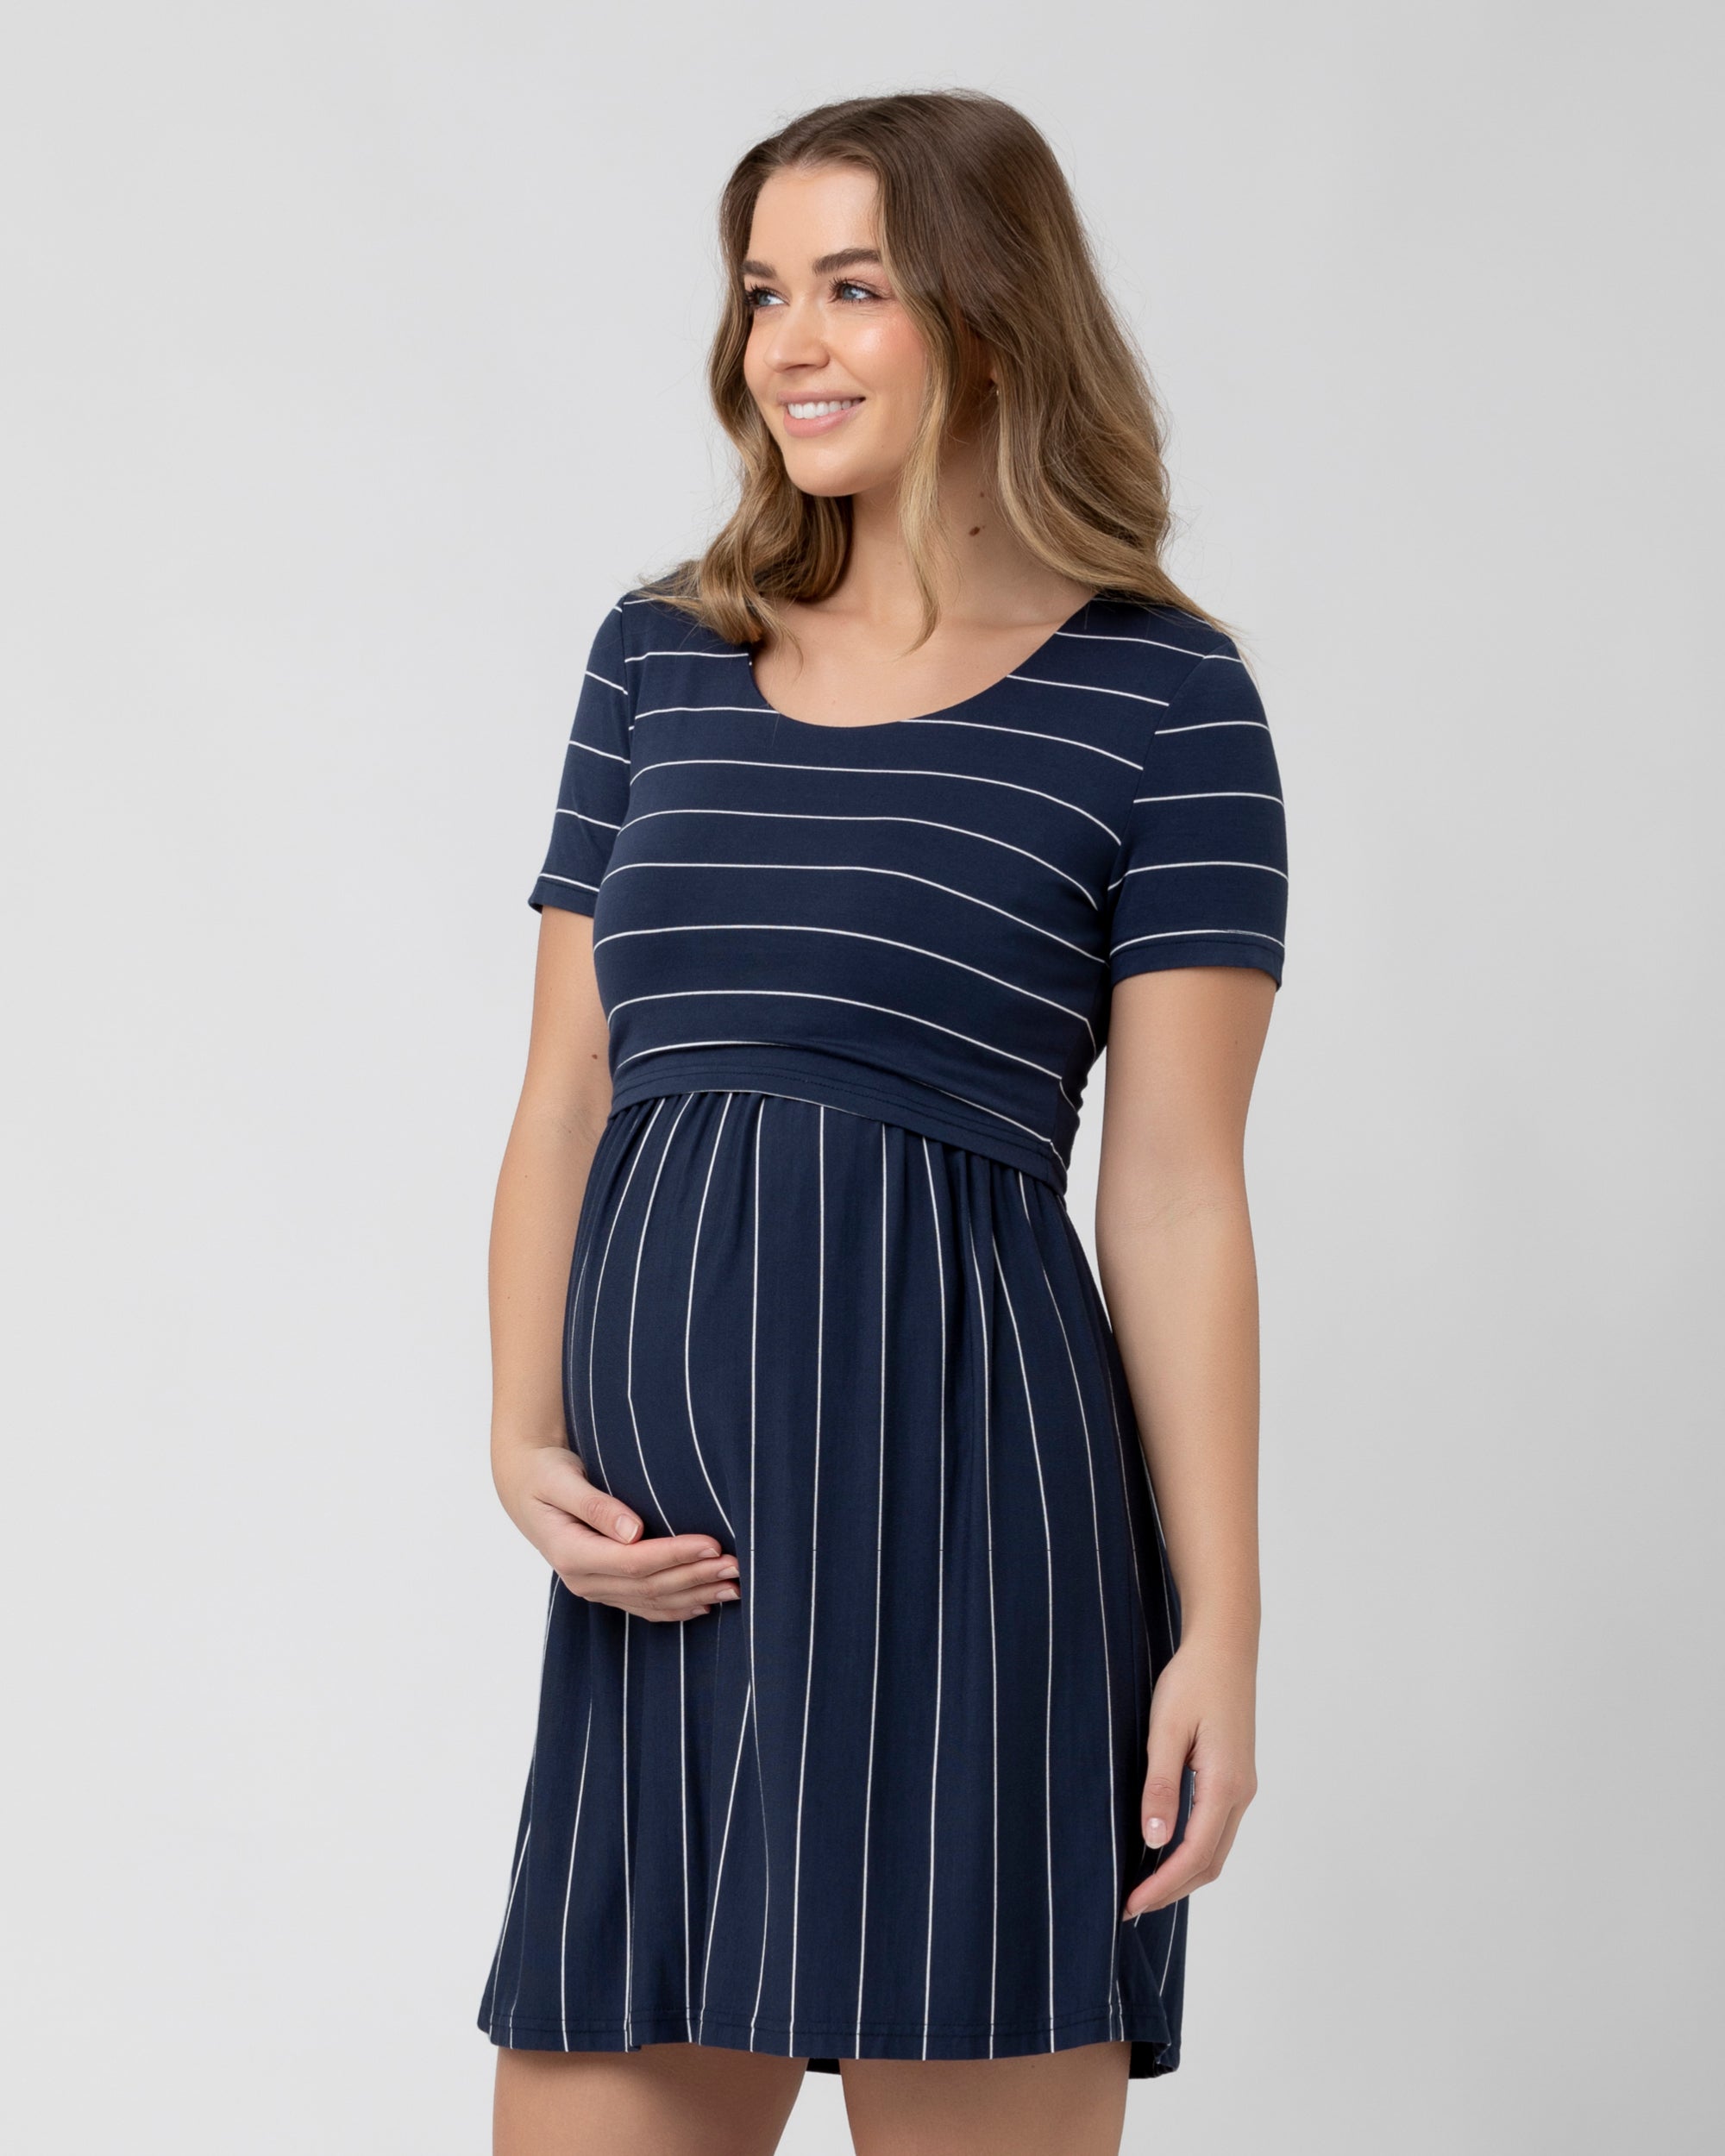 Grey & Navy Cotton Maternity & Nursing Dress